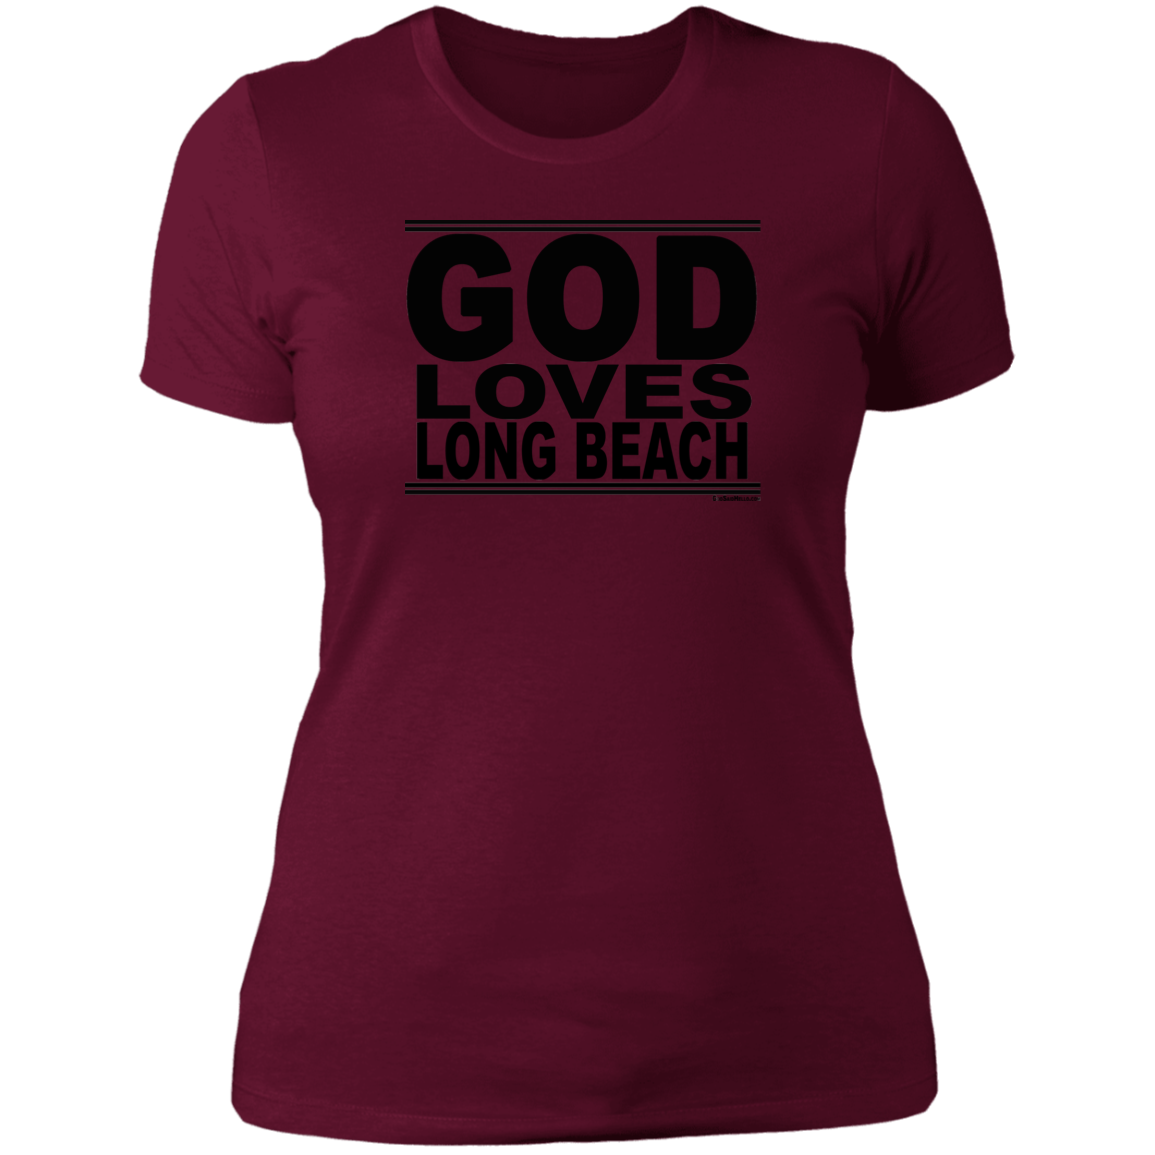 #GodLovesLongBeach - Women's Shortsleeve Tee